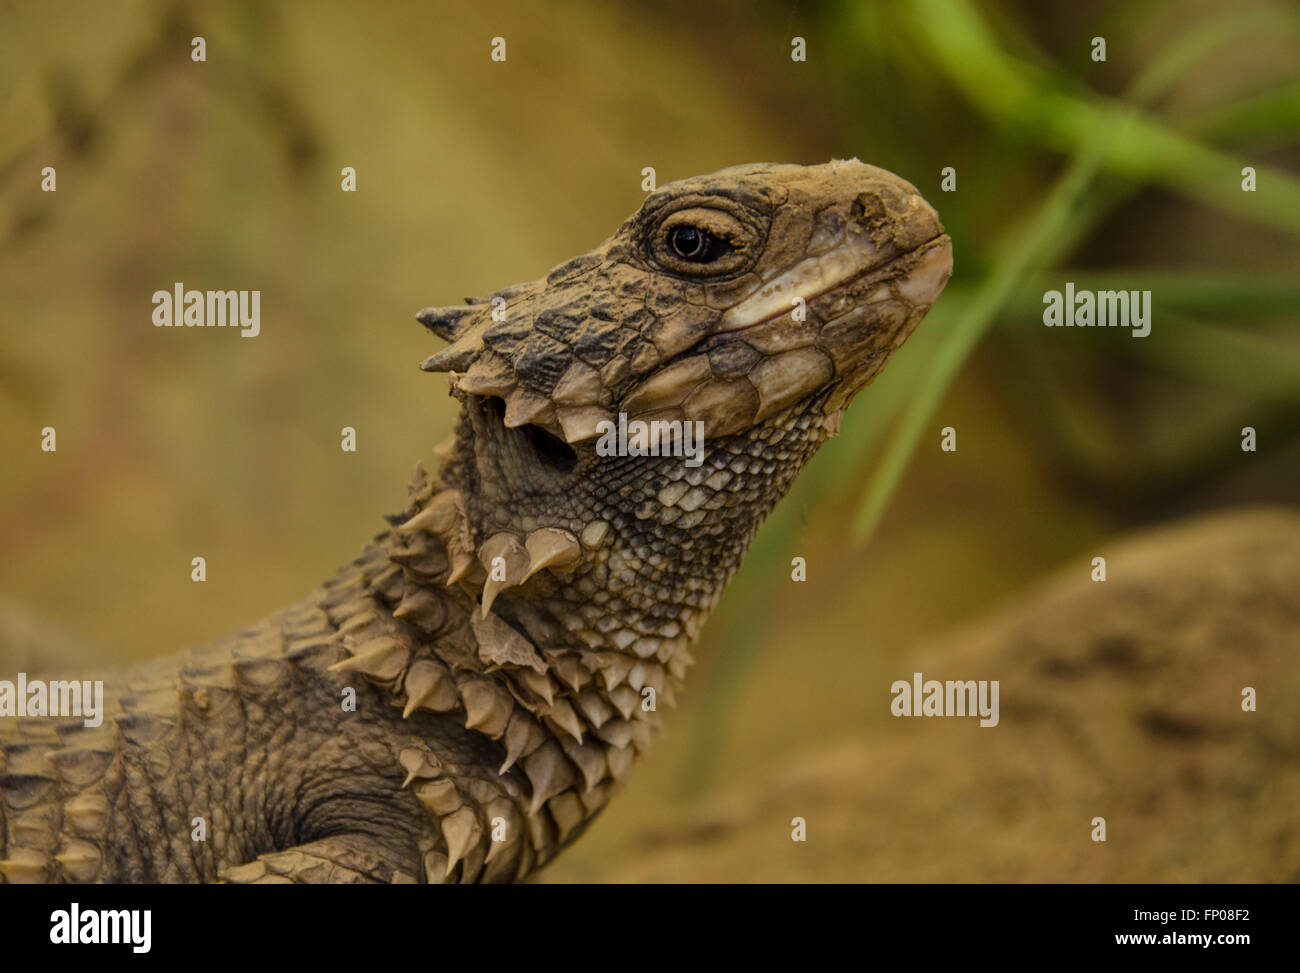 Giant girdled lizard posing Stock Photo